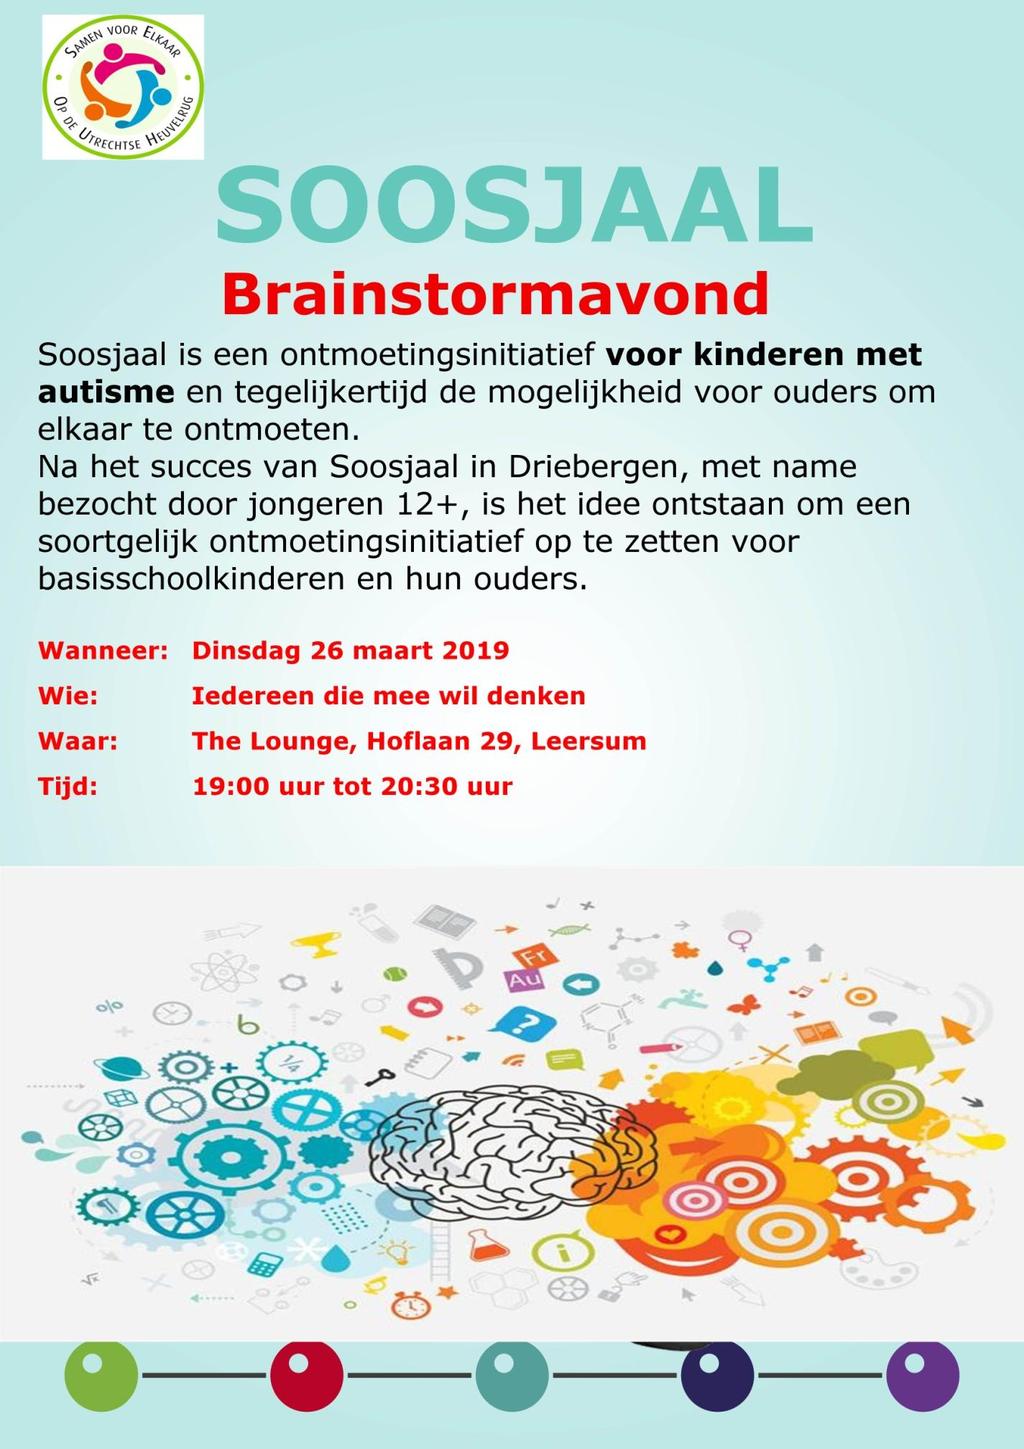 Sociaal Dorpsteam: Brainstormavond